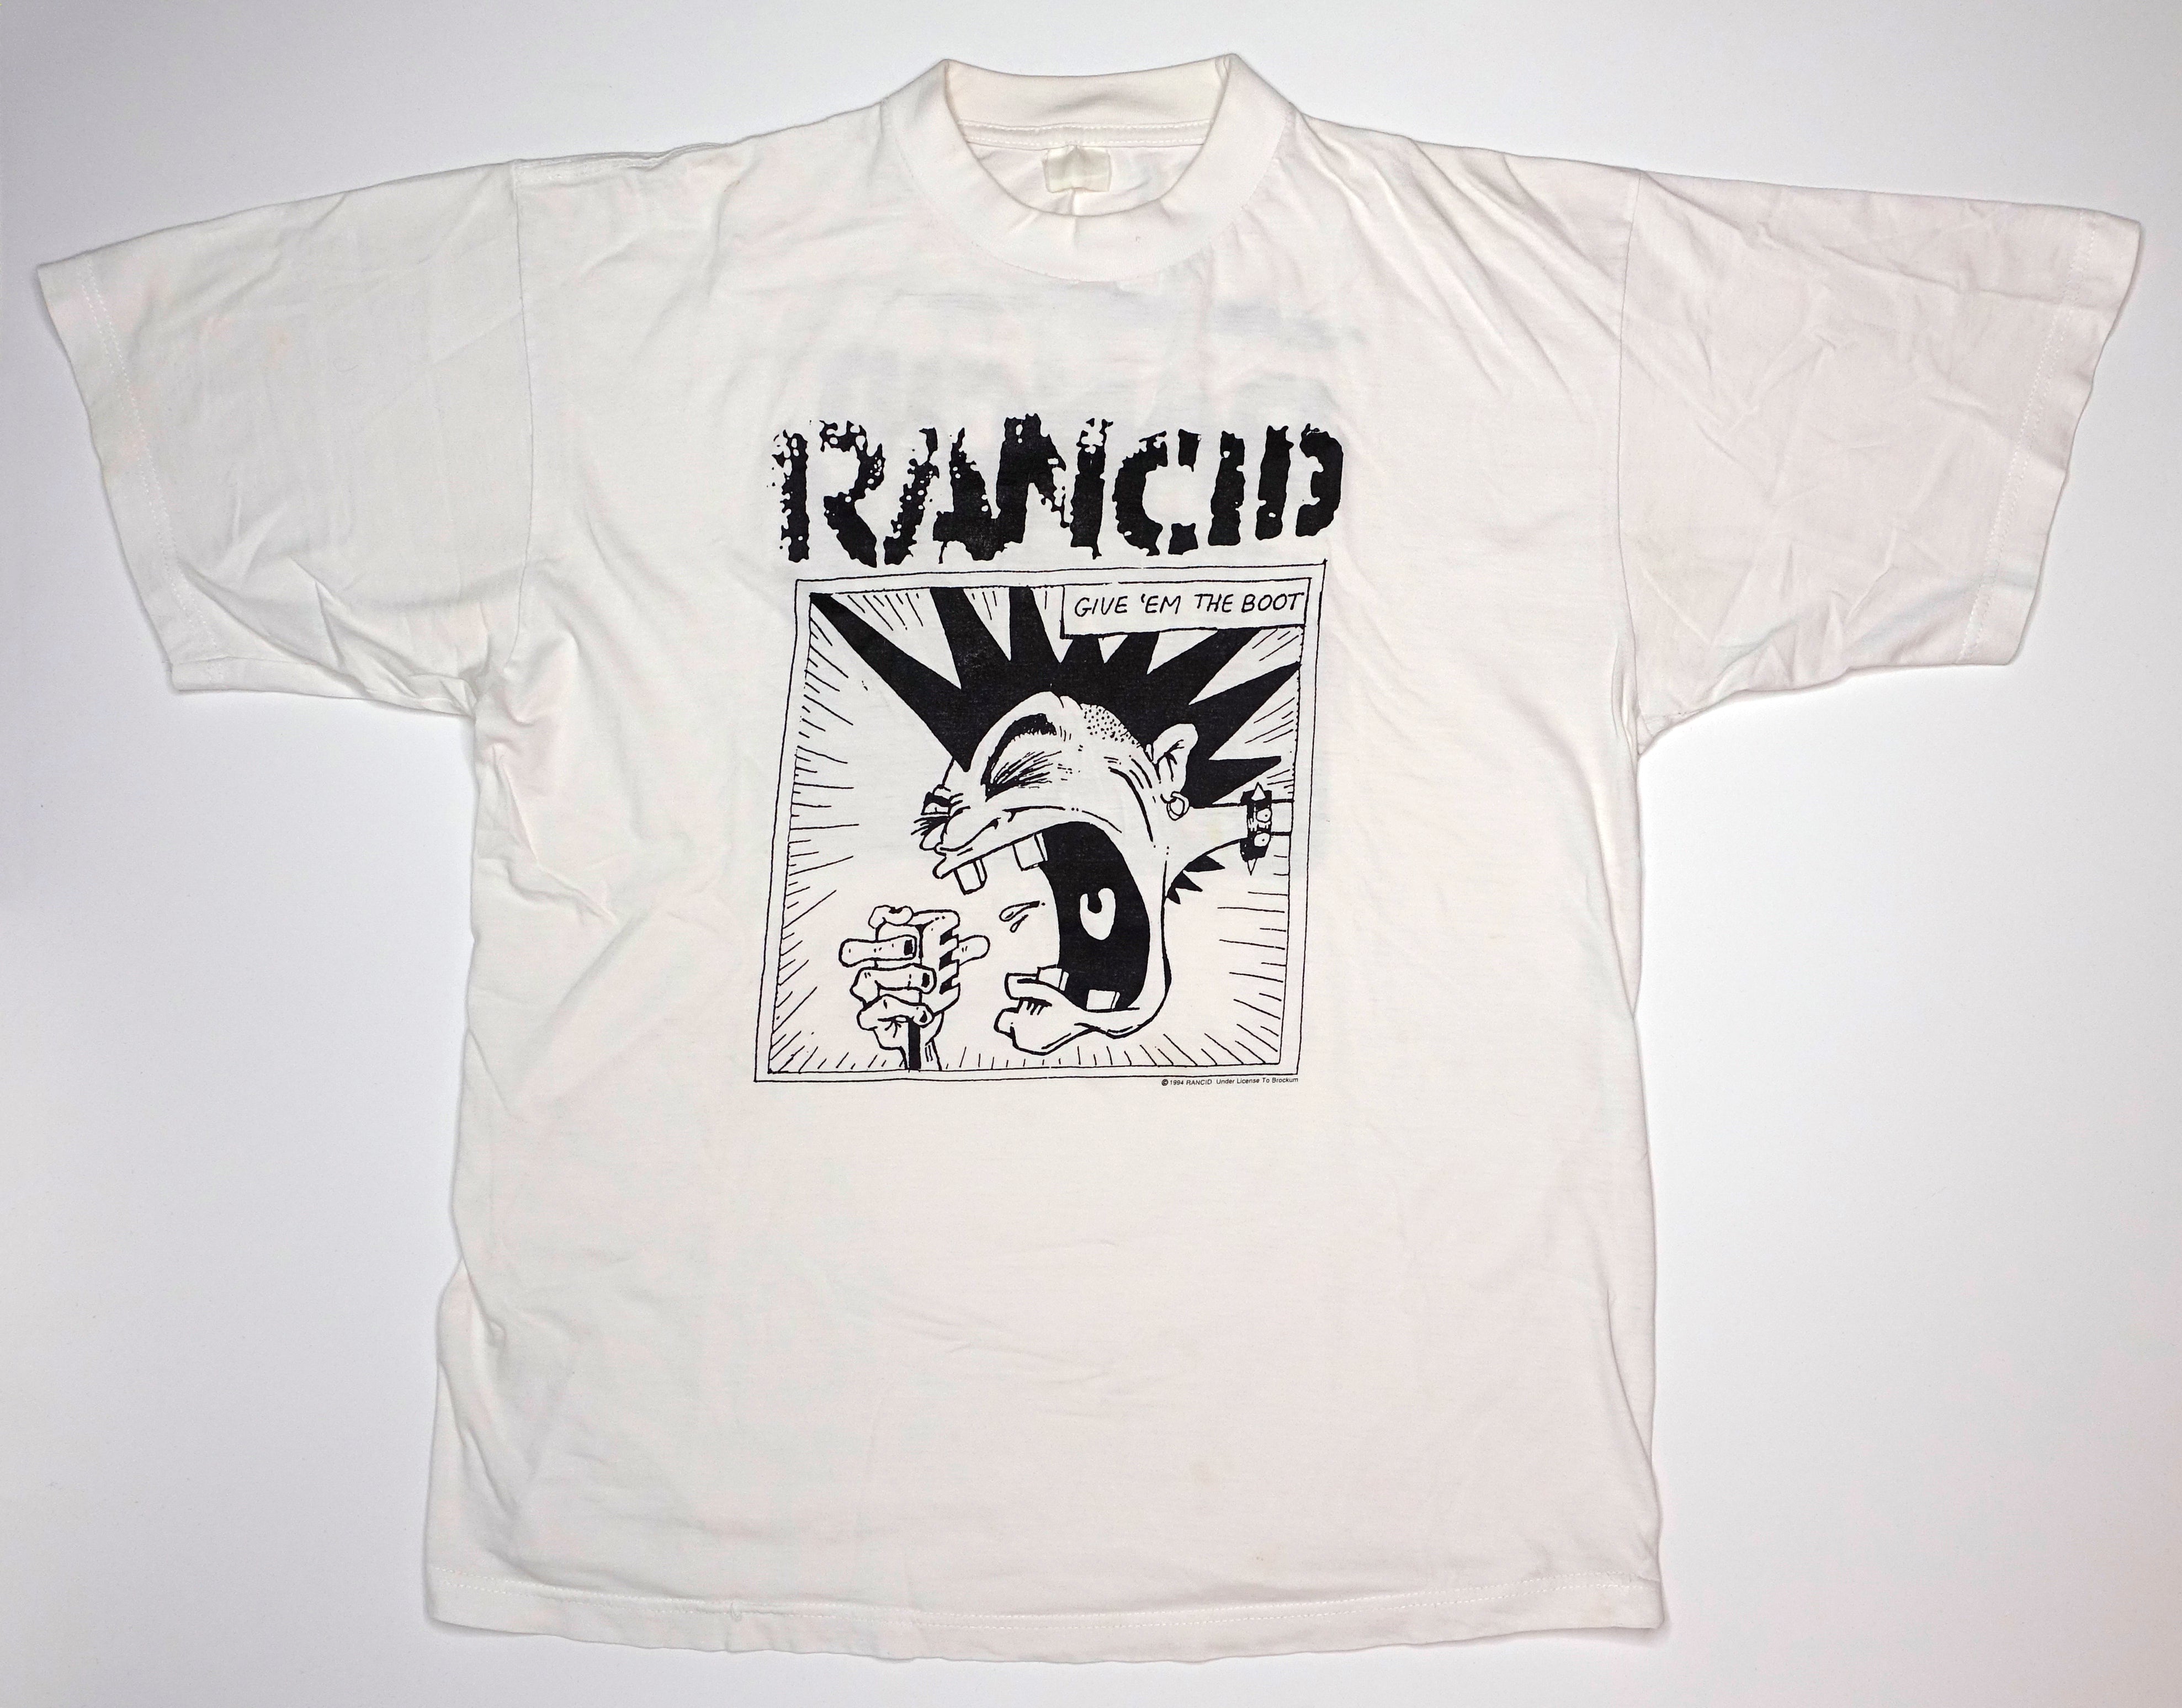 Rancid - Give 'Em The Boot / Let's Go 1994 Tour Shirt Size XL